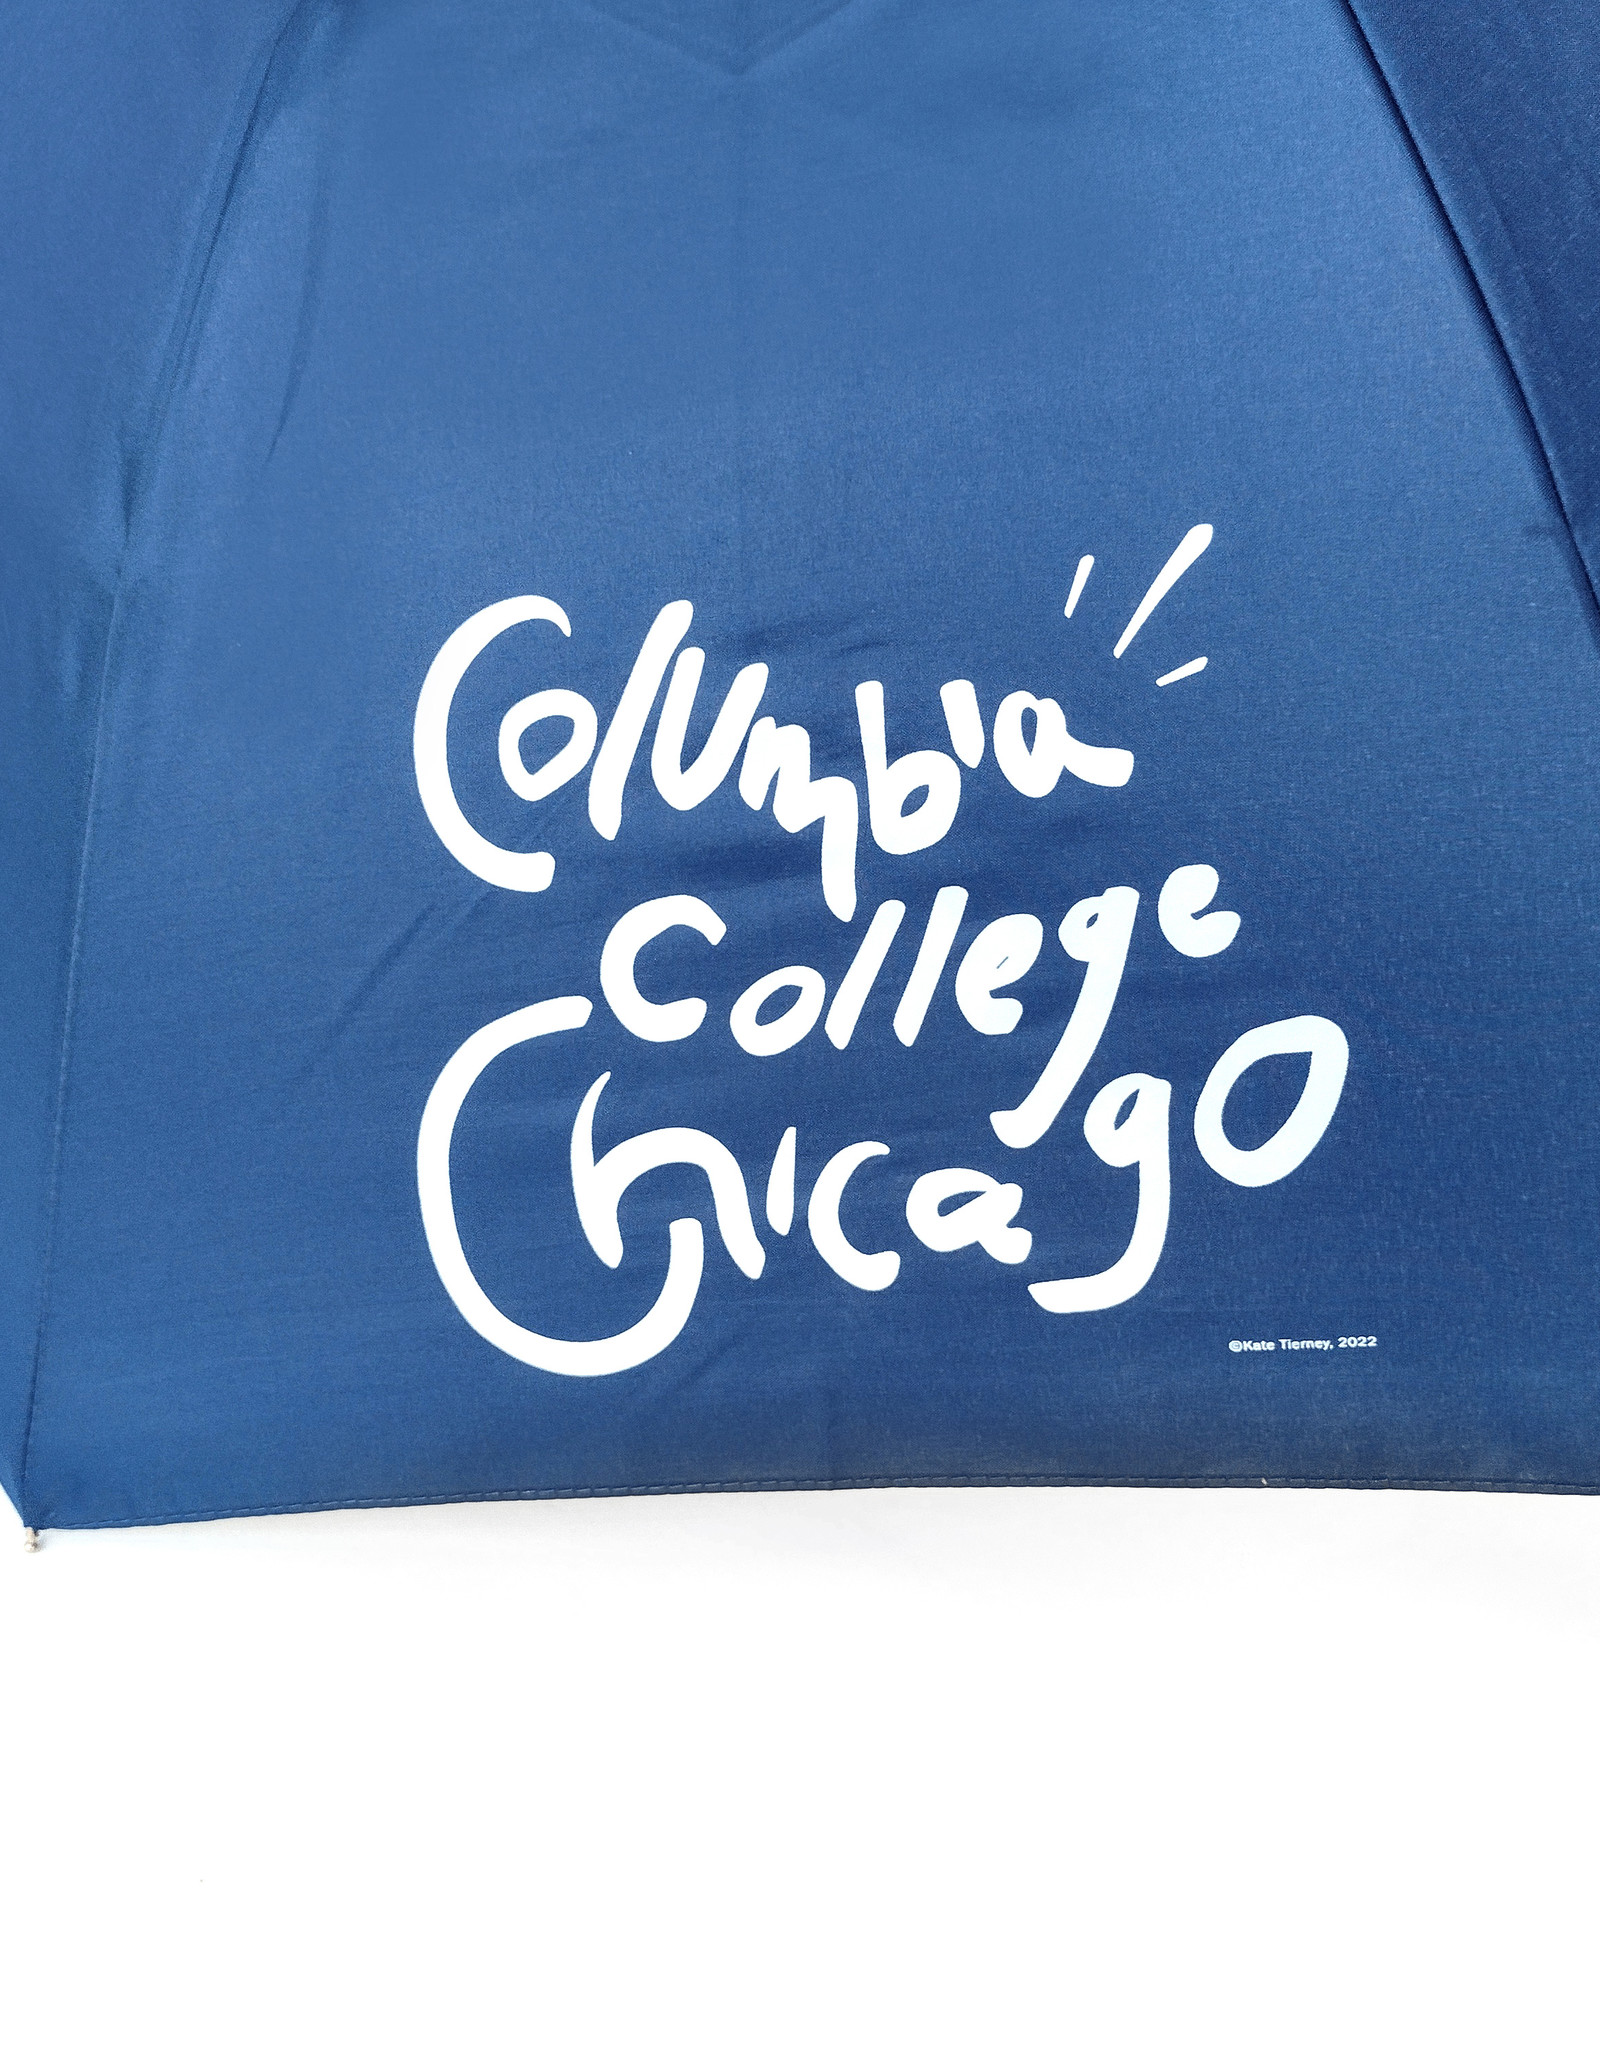 Buy Columbia, By Columbia NEW: Columbia College Chicago Umbrella